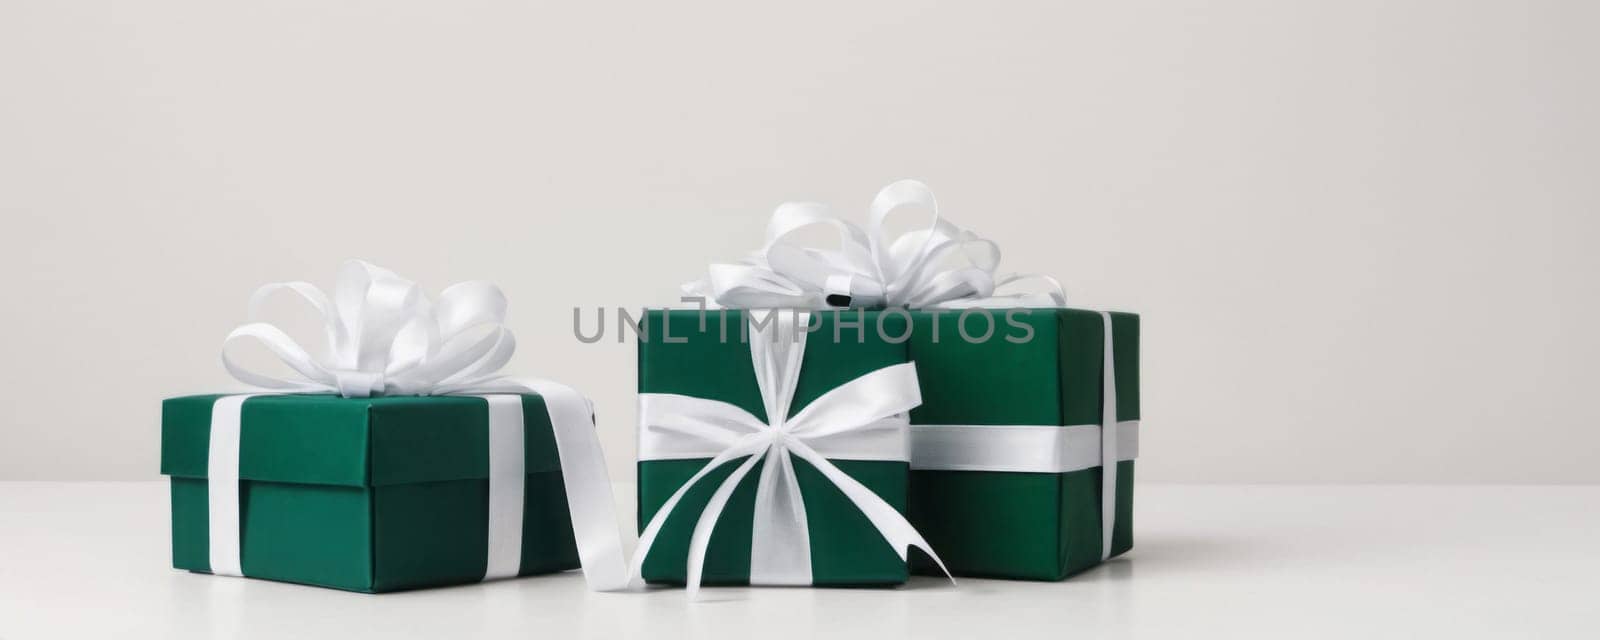 Three Elegant Gift Boxes for Celebration by nkotlyar